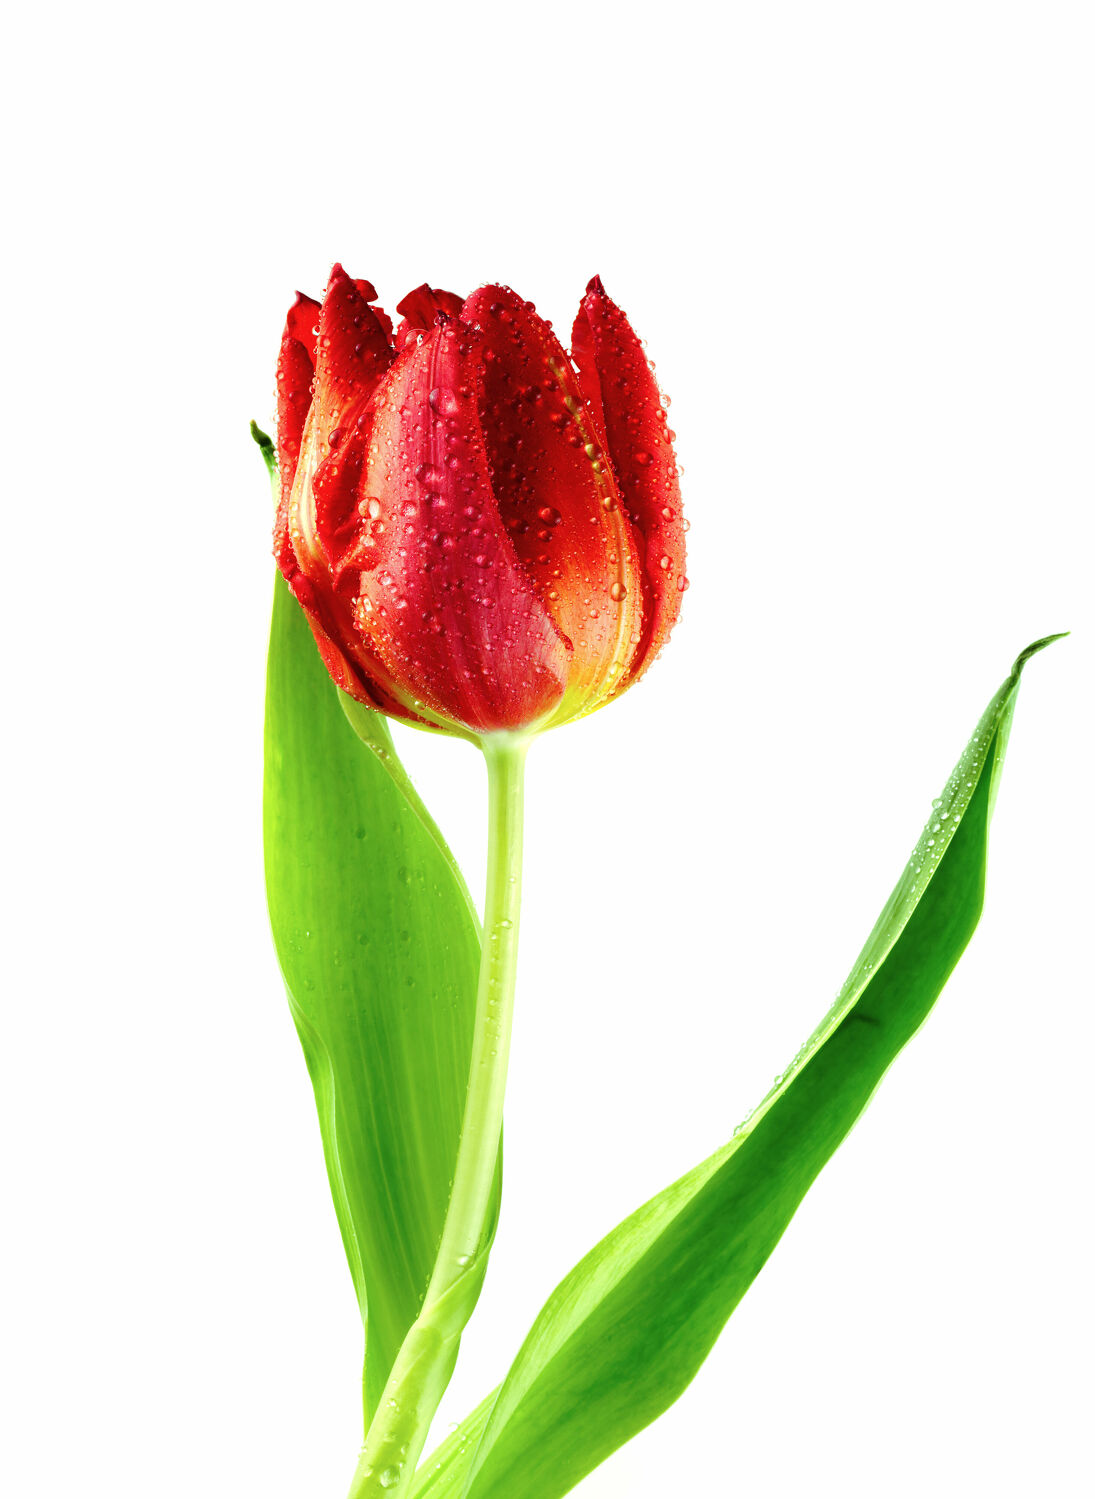 Bild mit Blume, Pflanze, Tulpe, Tulips, Tulpen, Tulipa, Tulip, rote Tulpe, red tulip